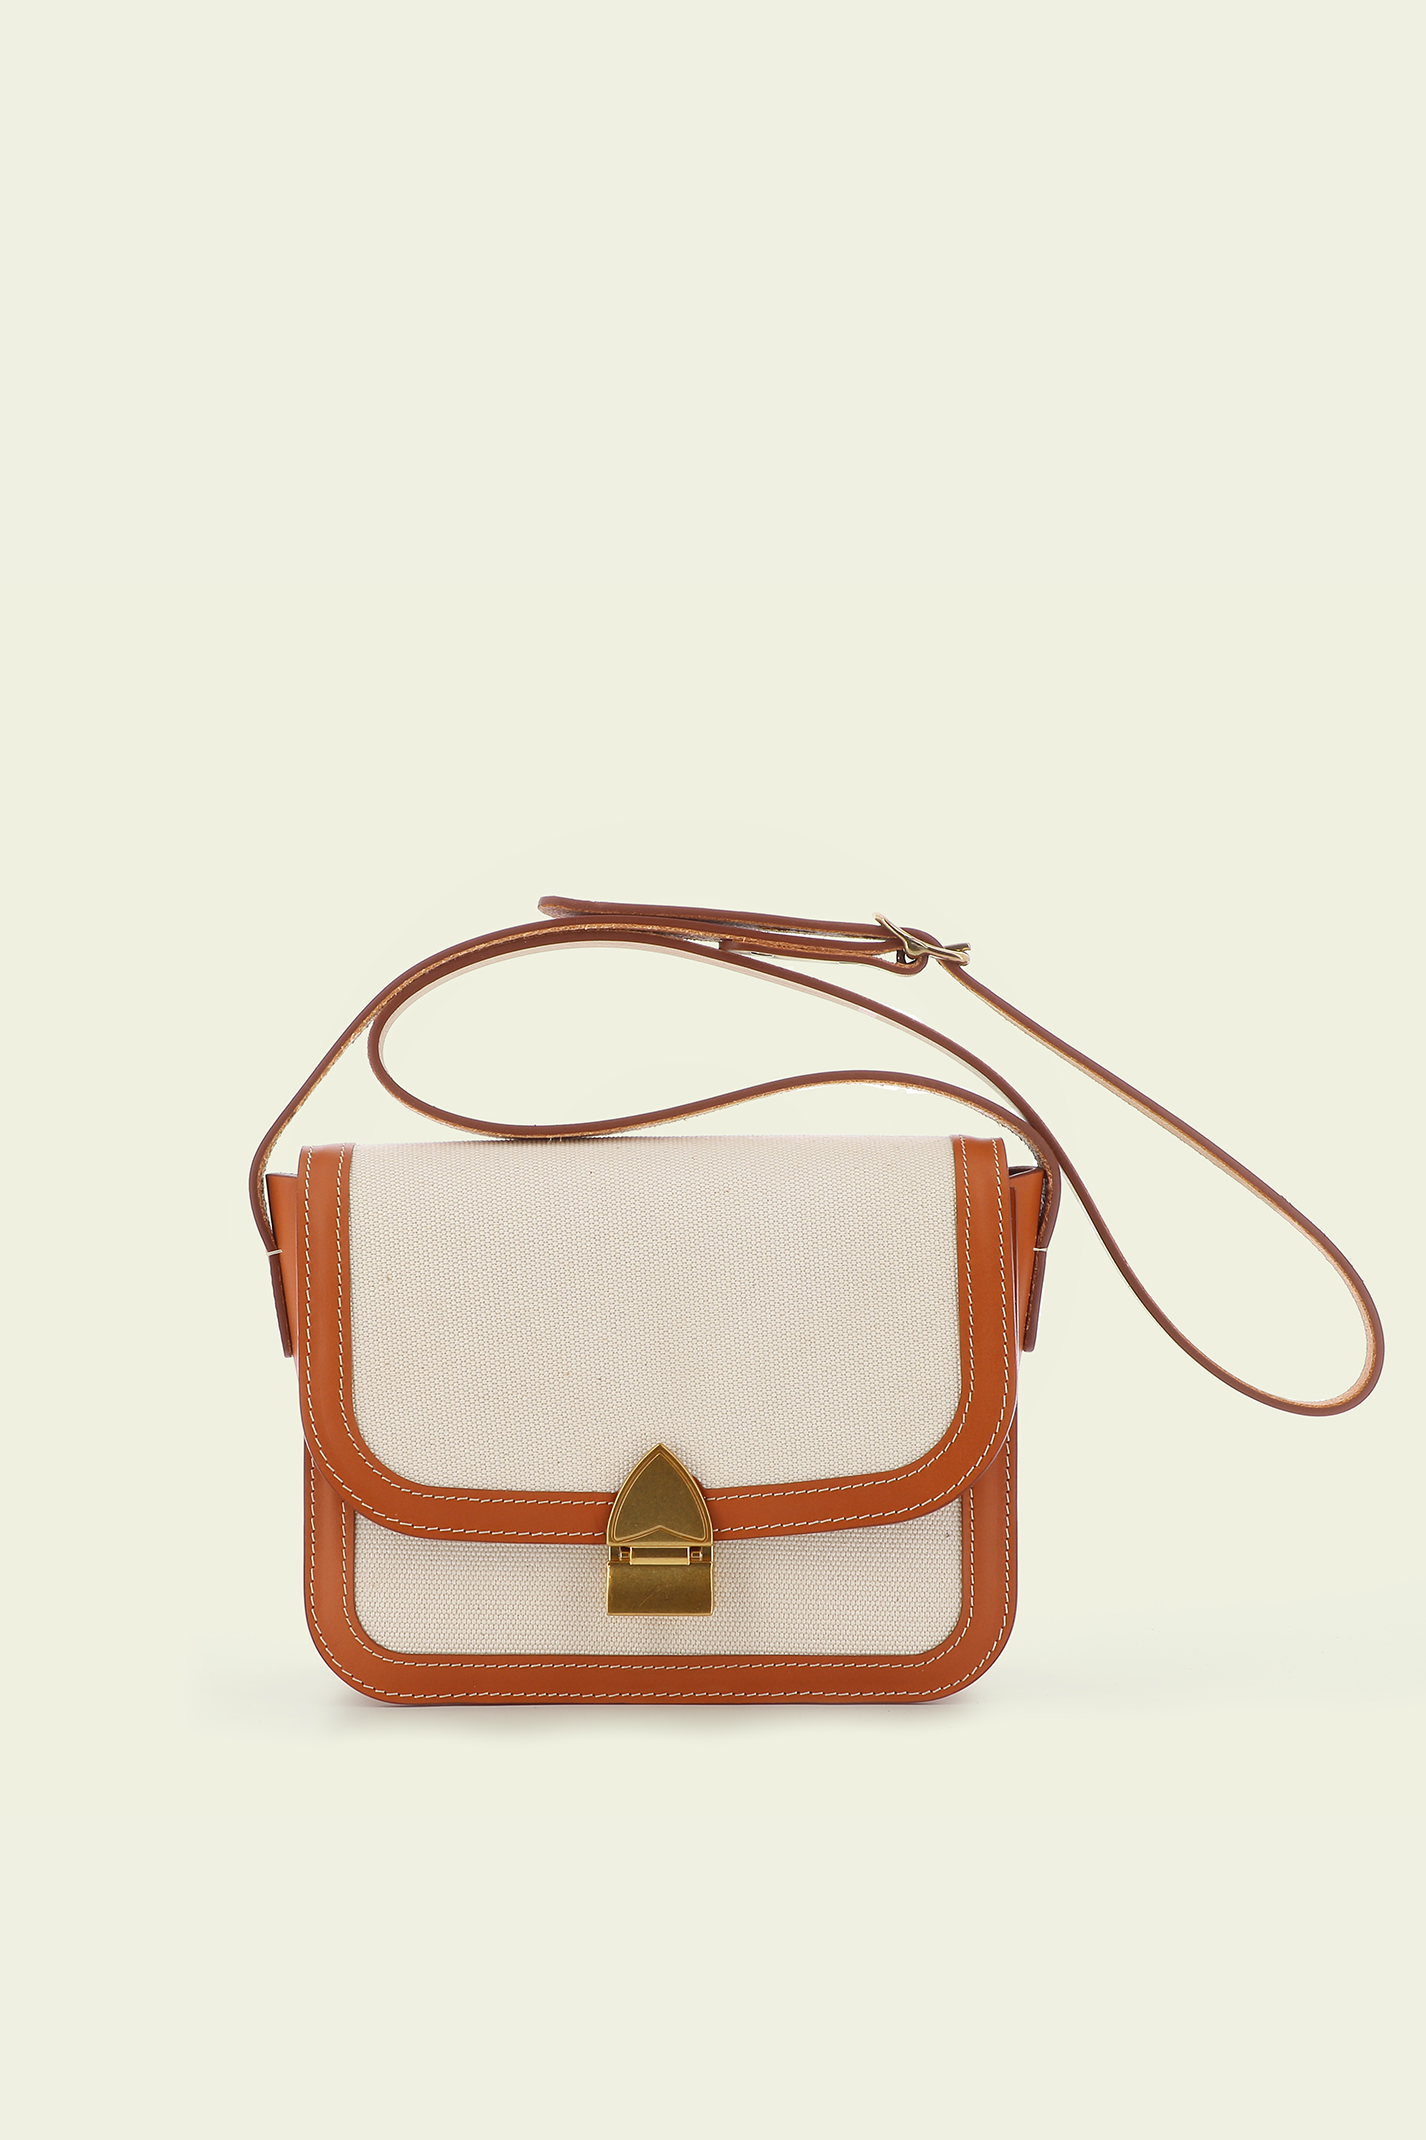 The Colette handbag - Nil